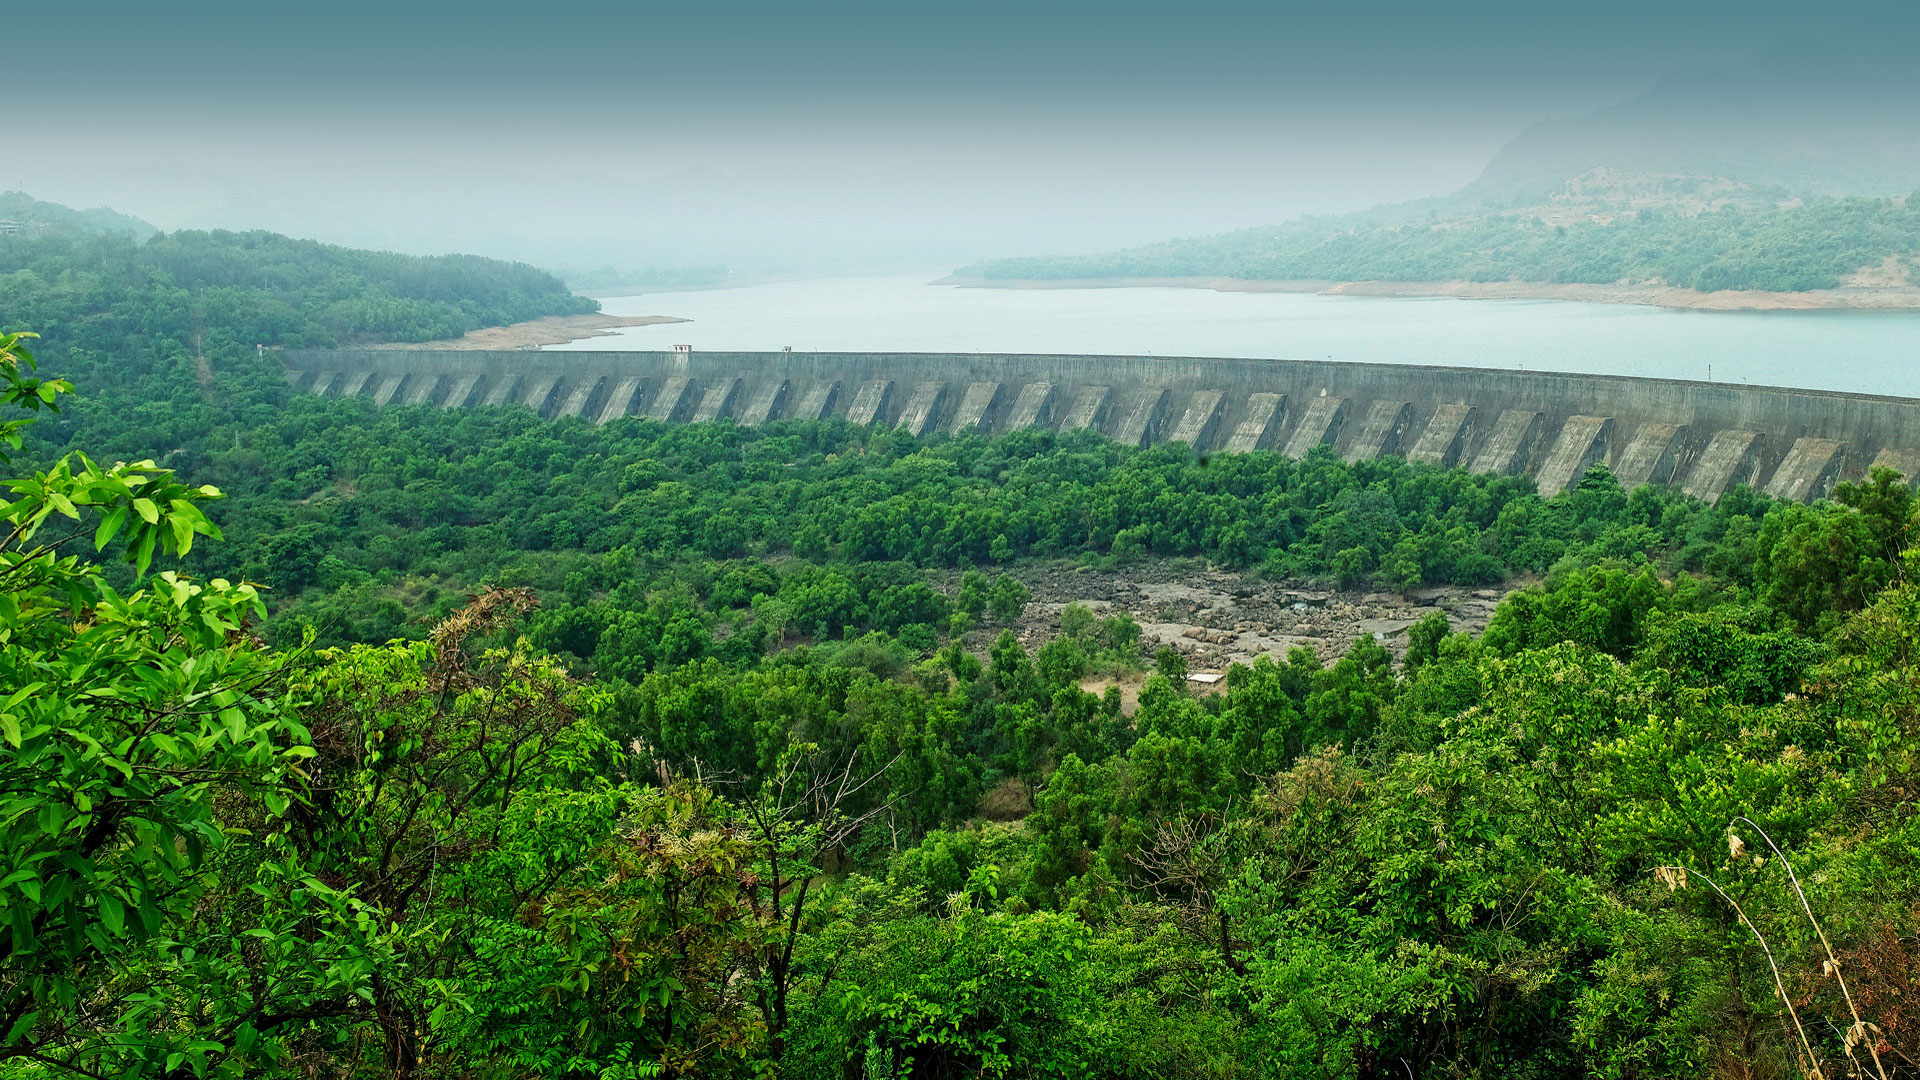 The area around Tata Motors' Walwhan Dam is an environmental hotspot